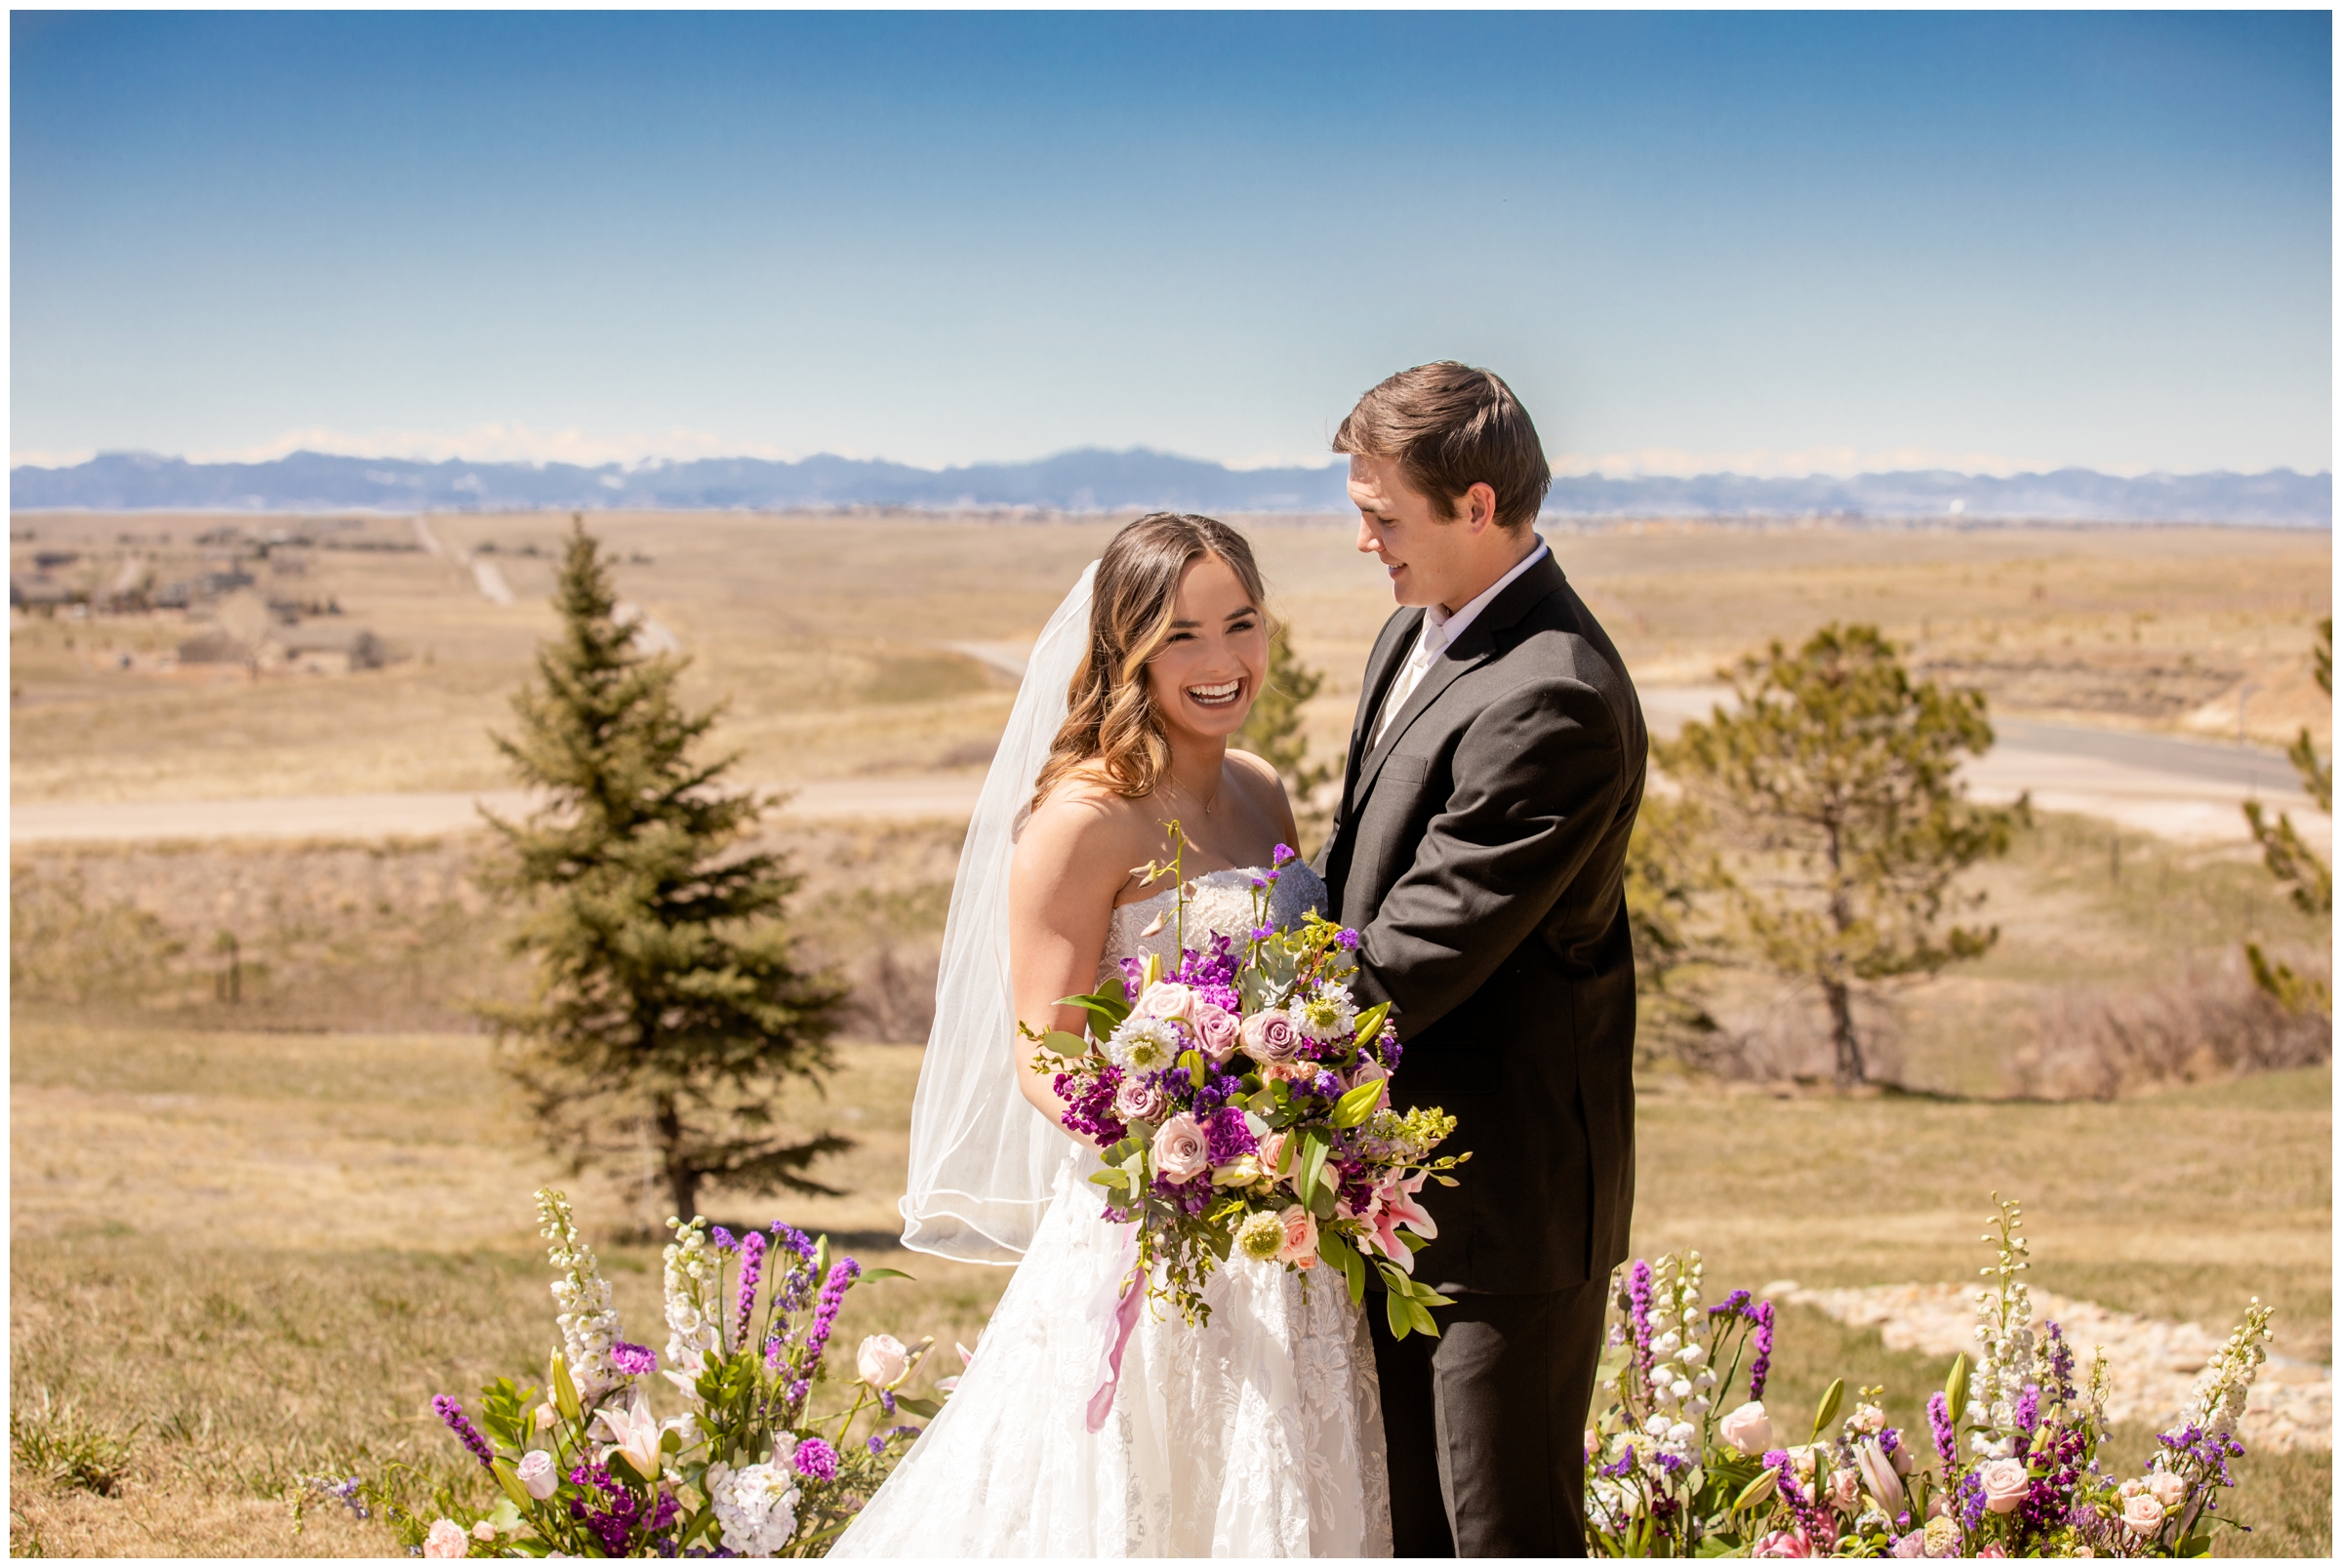 Bonnie Blues wedding photos by Colorado elopement photographer Plum Pretty Photography